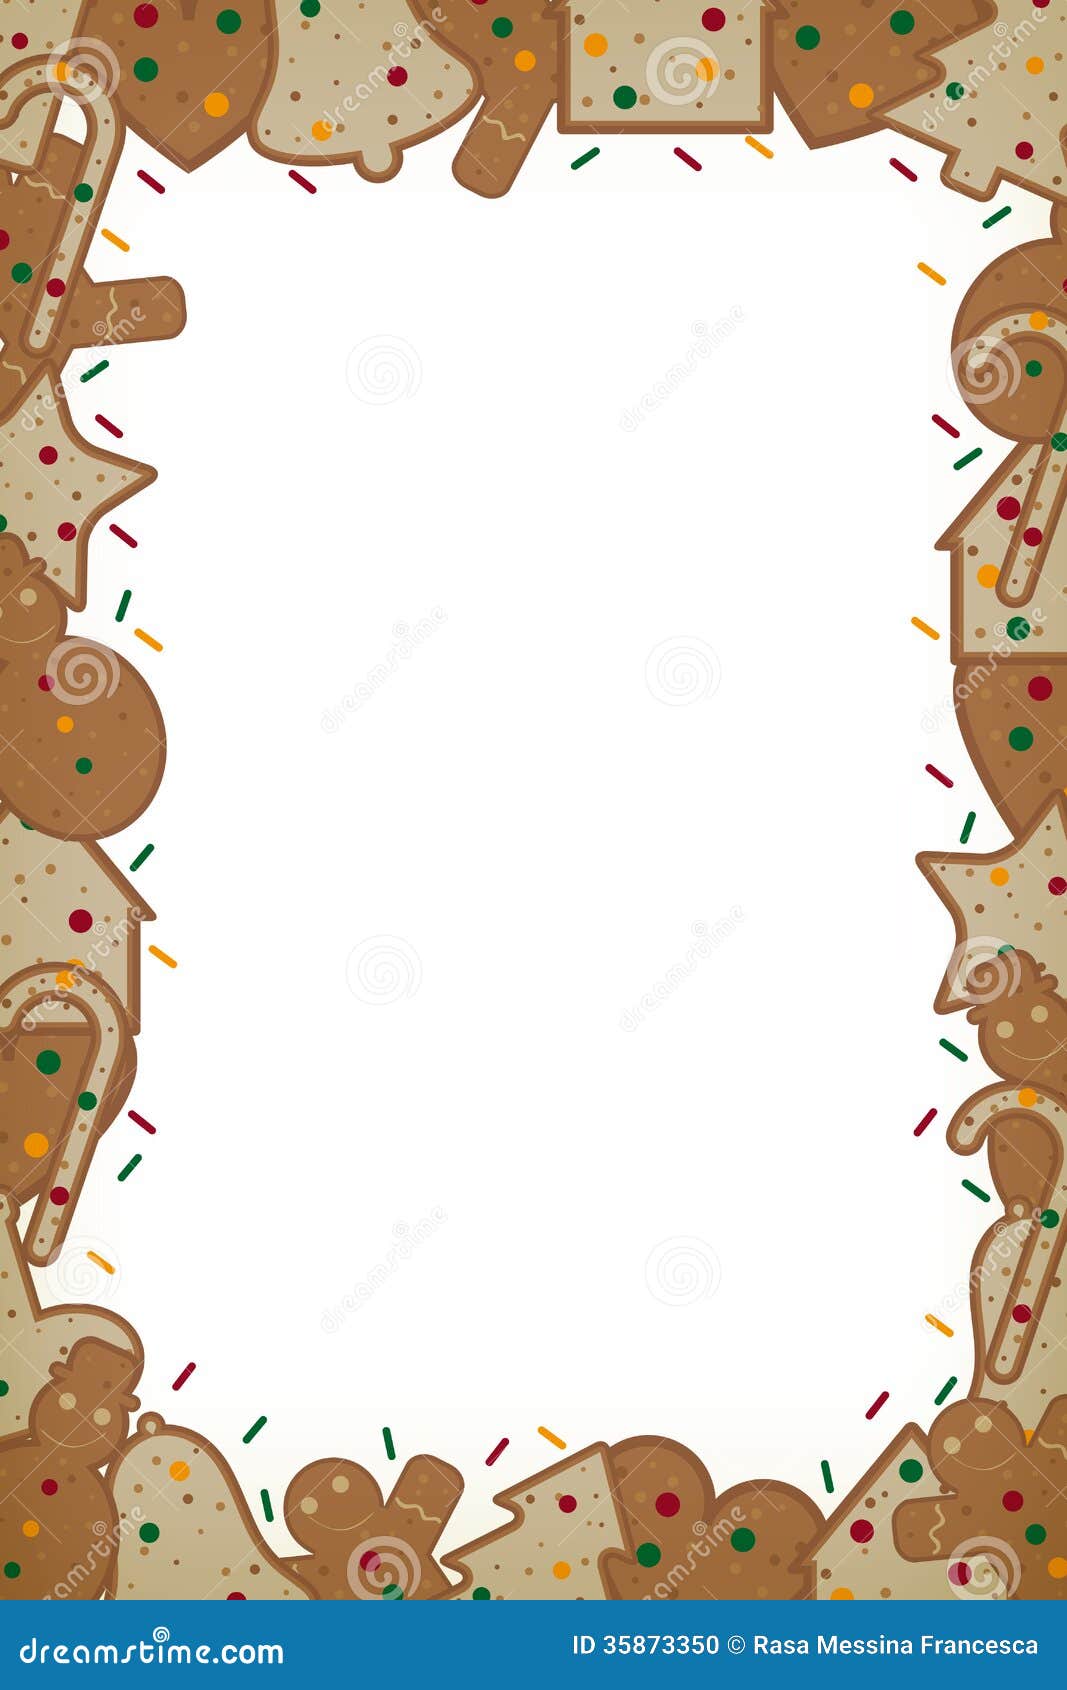 free gingerbread house borders clip art - photo #34